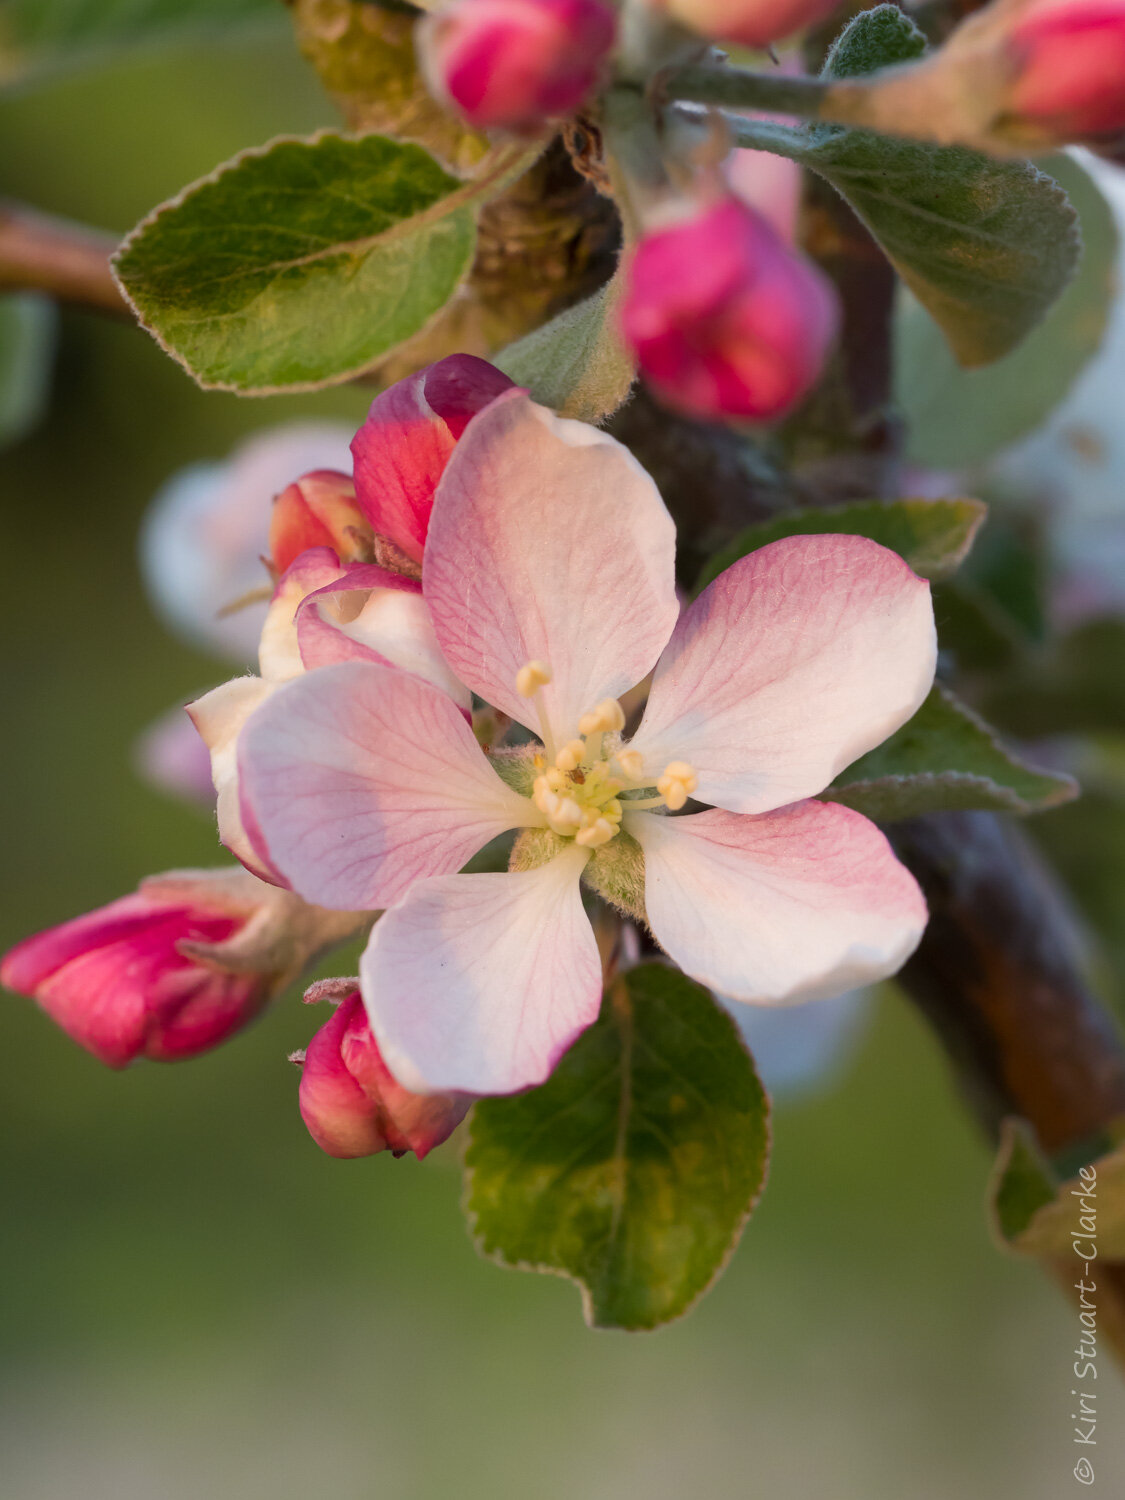  Apple tree blossom 0 